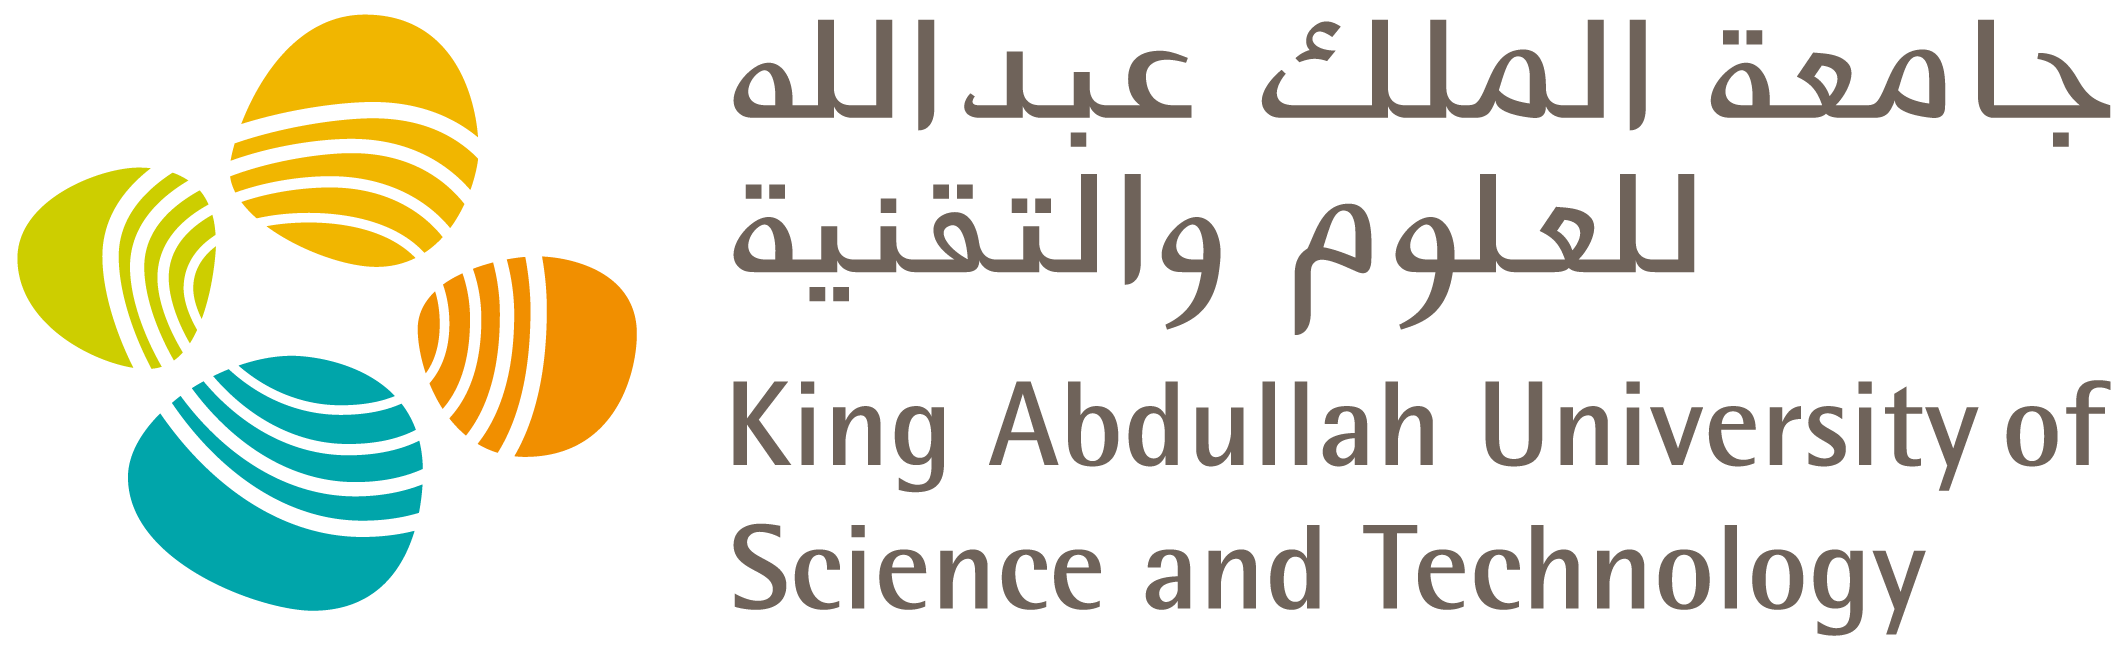 KAUST logo